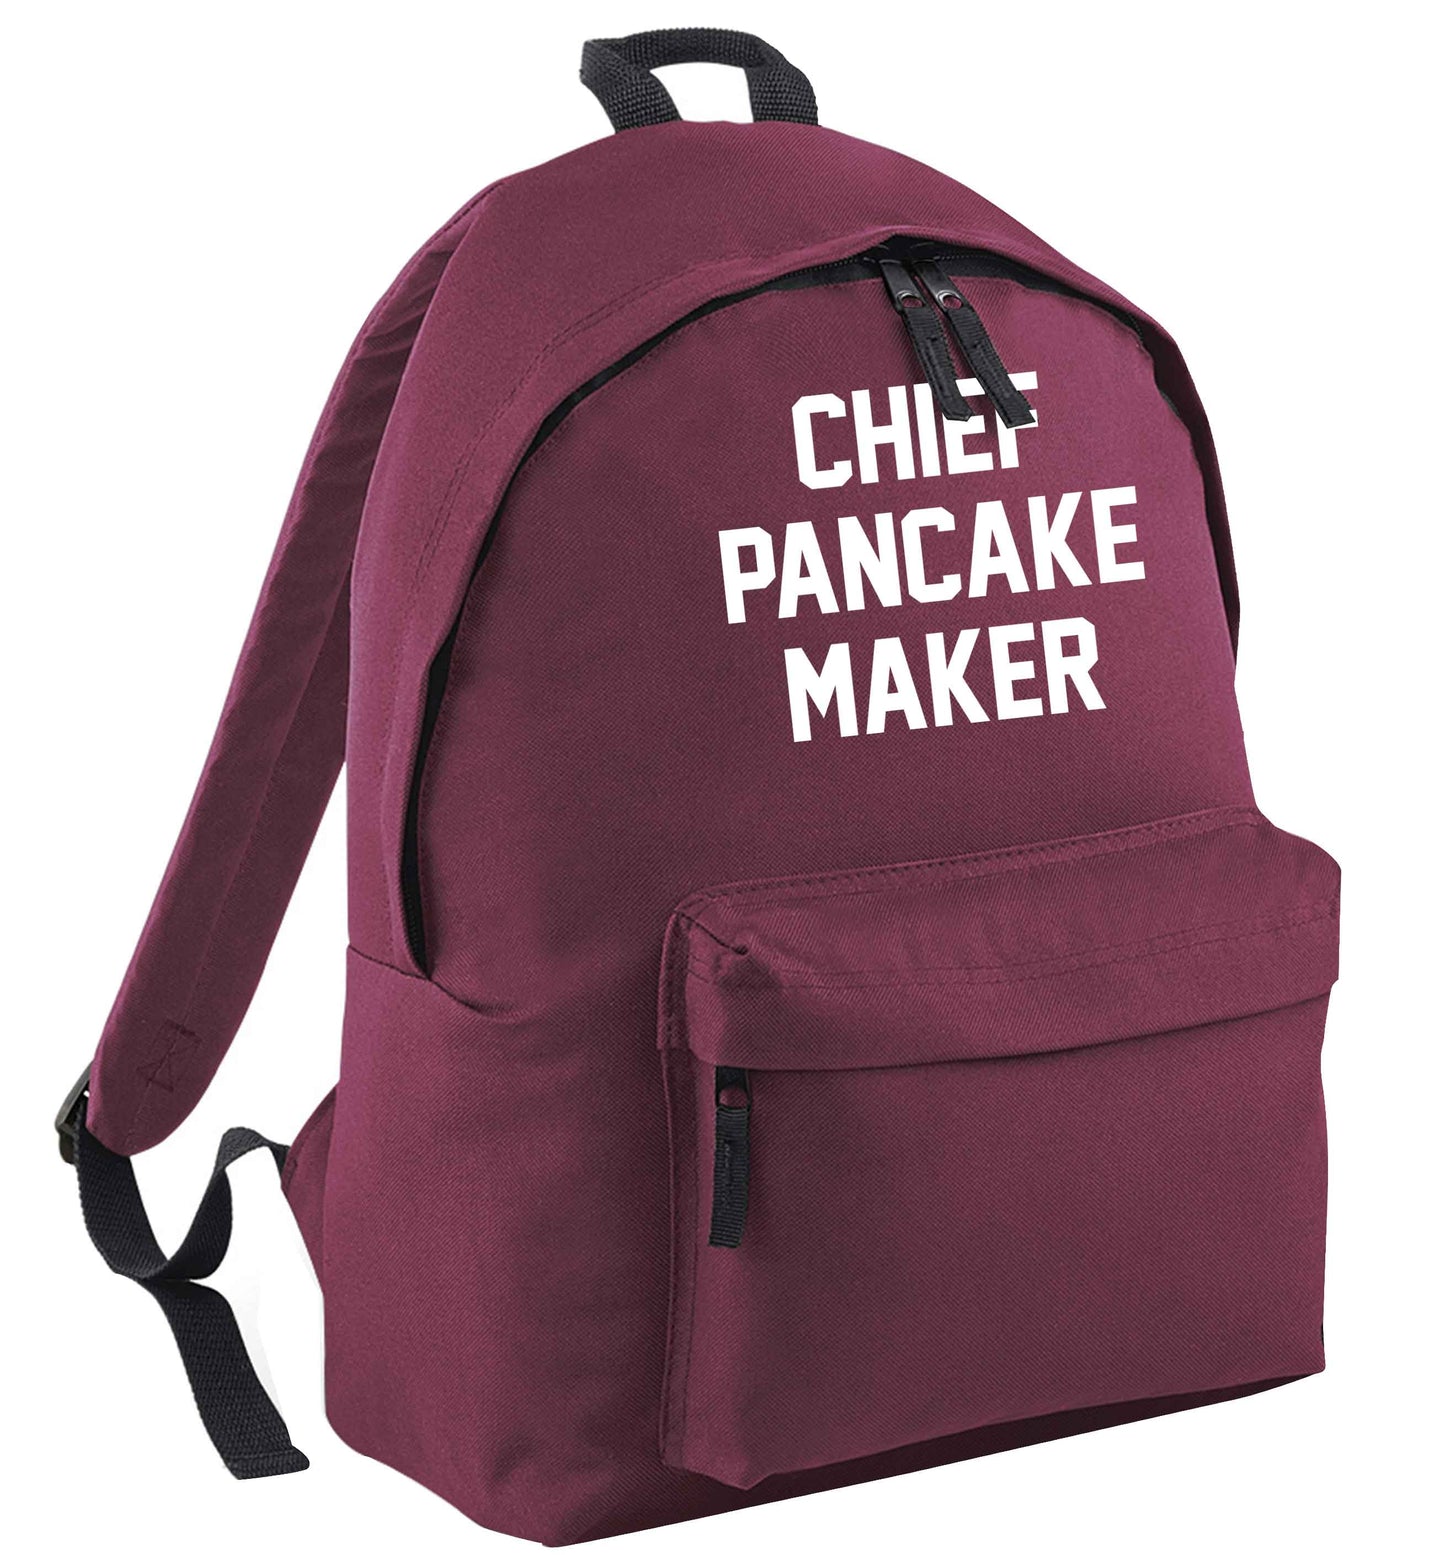 Chief pancake maker black childrens backpack